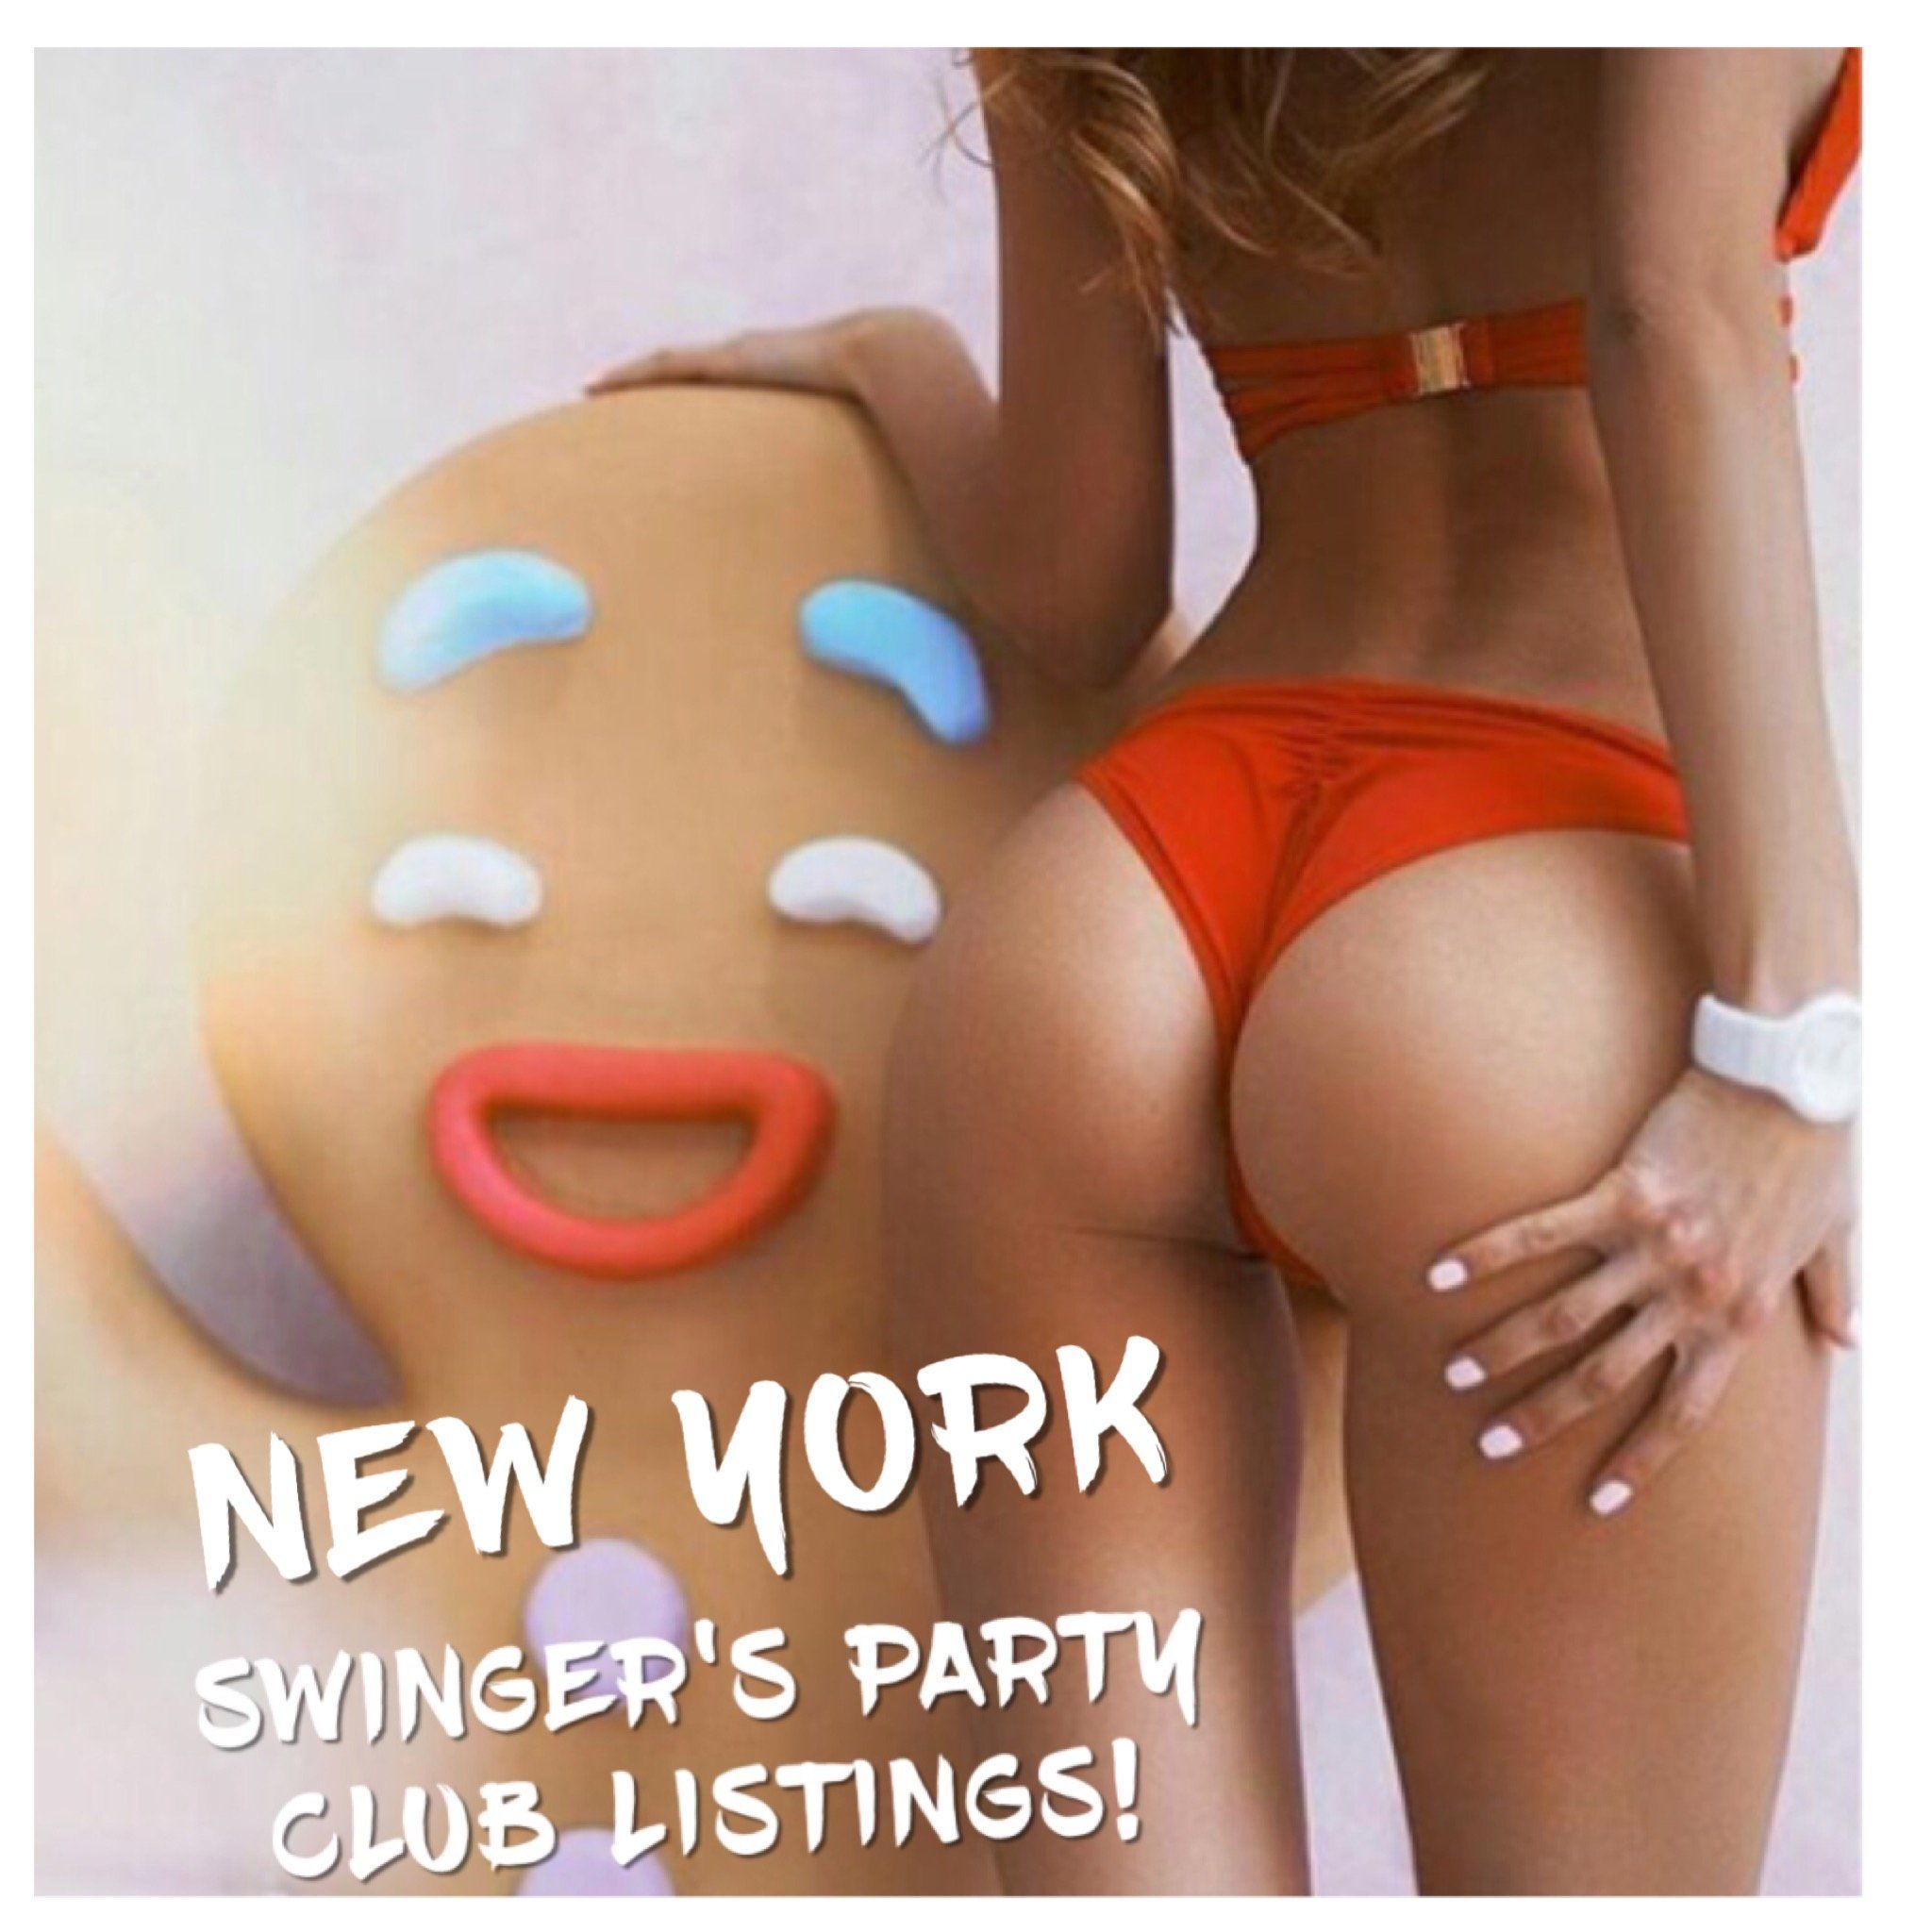 On premises swinger clubs nyc Best porno free archive. kuva